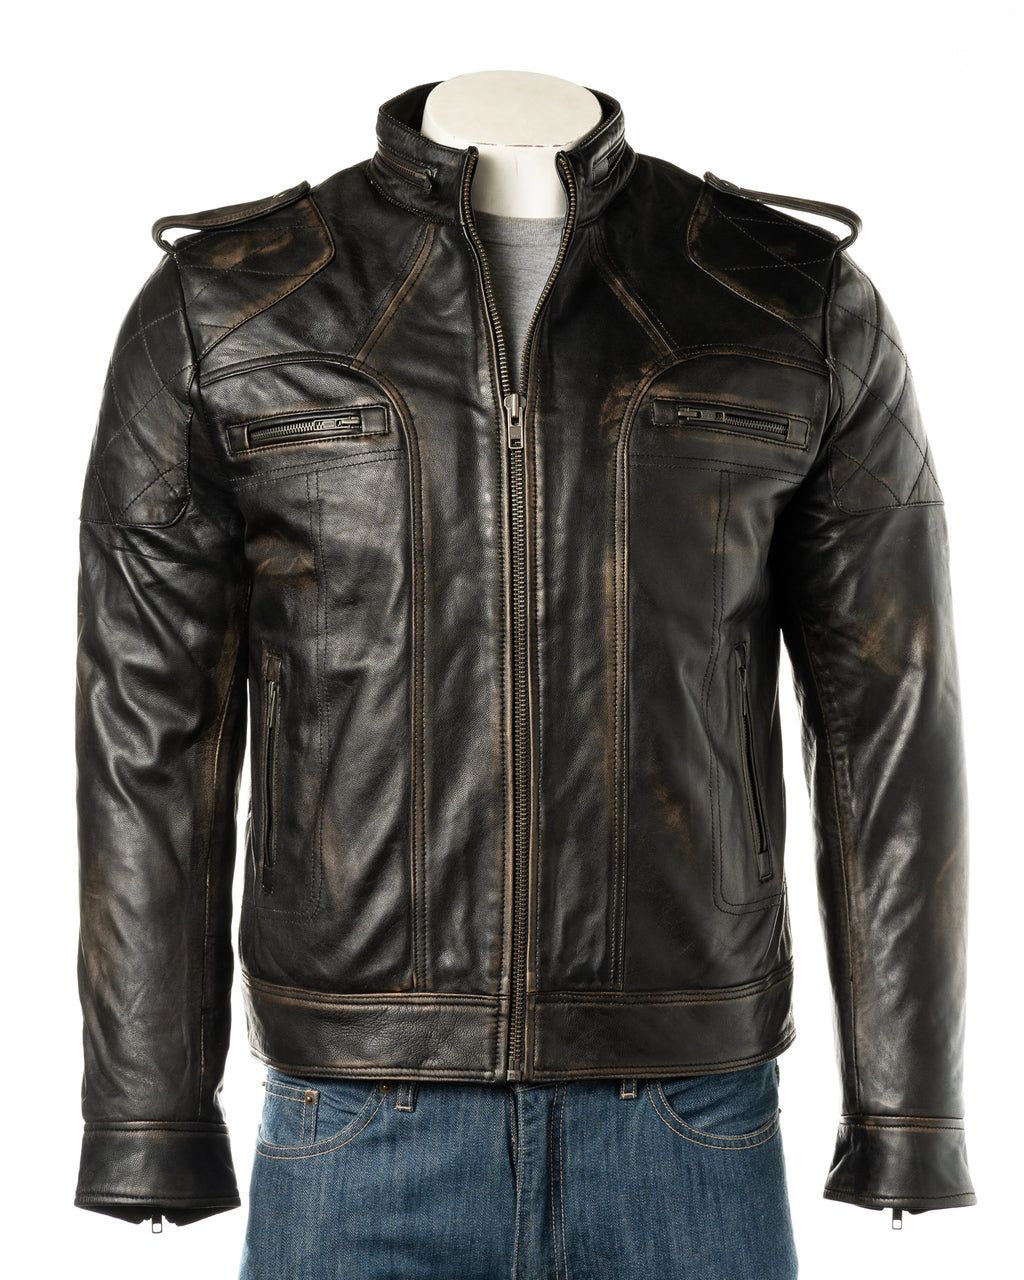 Mens Antique Black Leather Biker Style Jacket: Alvize